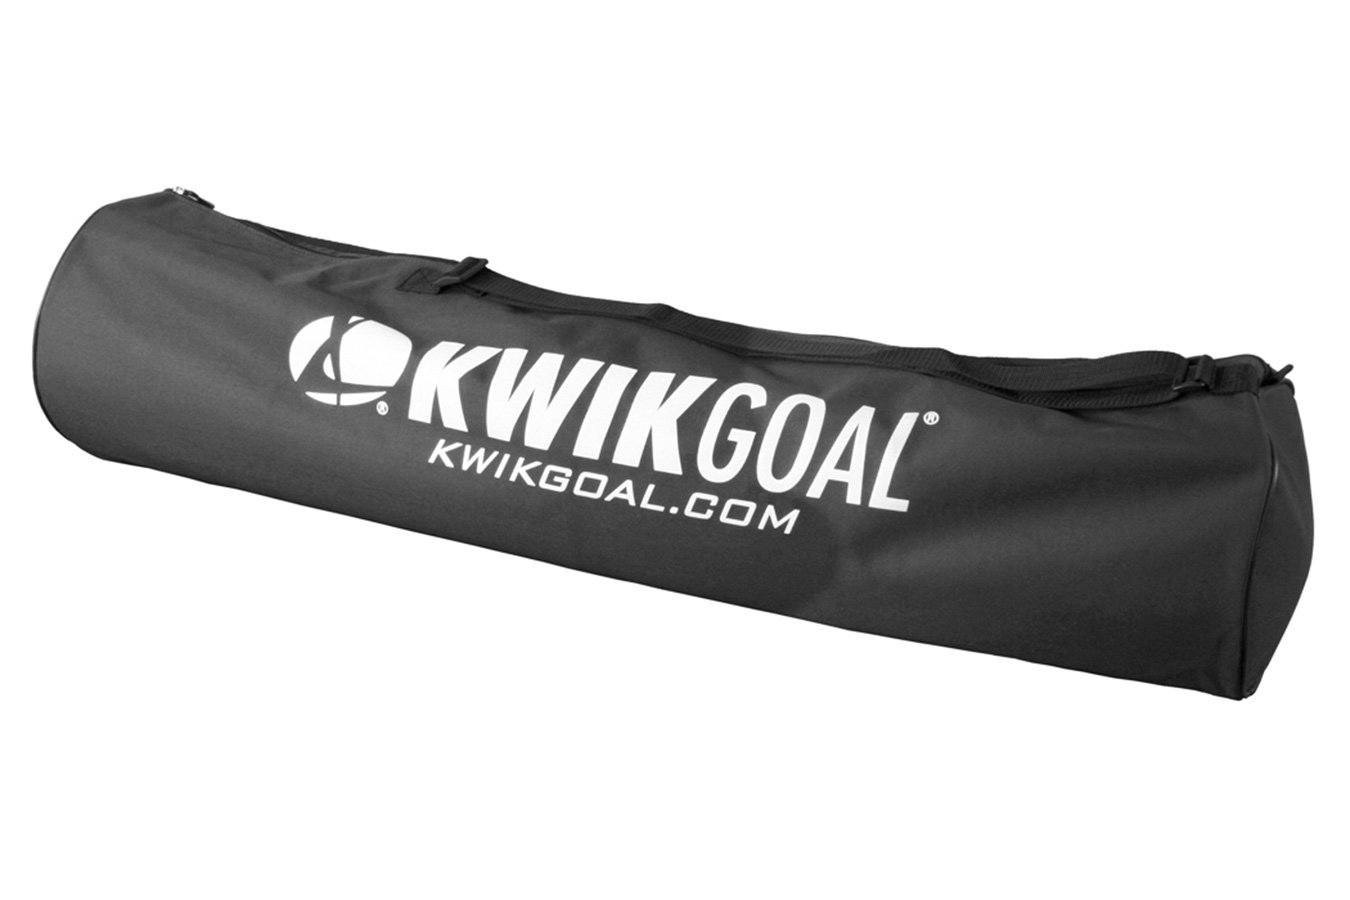 Kwikgoal Match Play Ball Bag | 5B1706 Training equipment Kwikgoal Black 